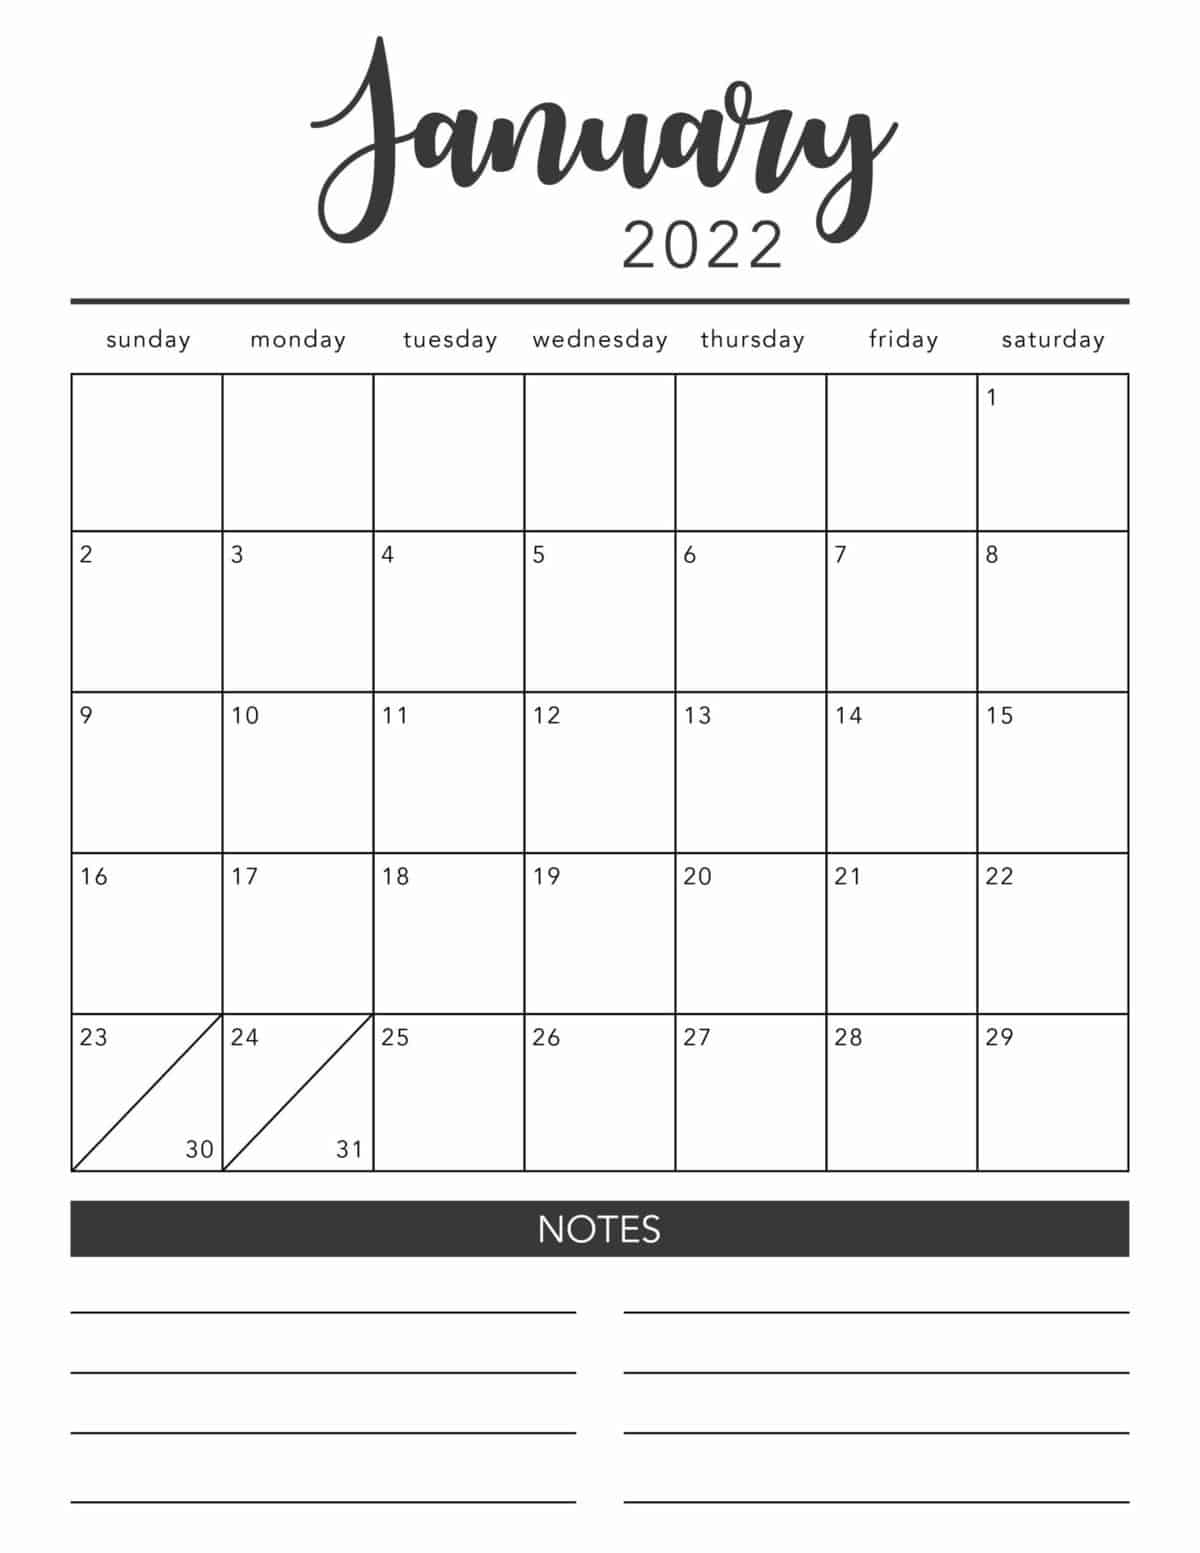 2022 Calendar Sheets Printable.Free 2022 Printable Calendar Template 2 Colors I Heart Naptime